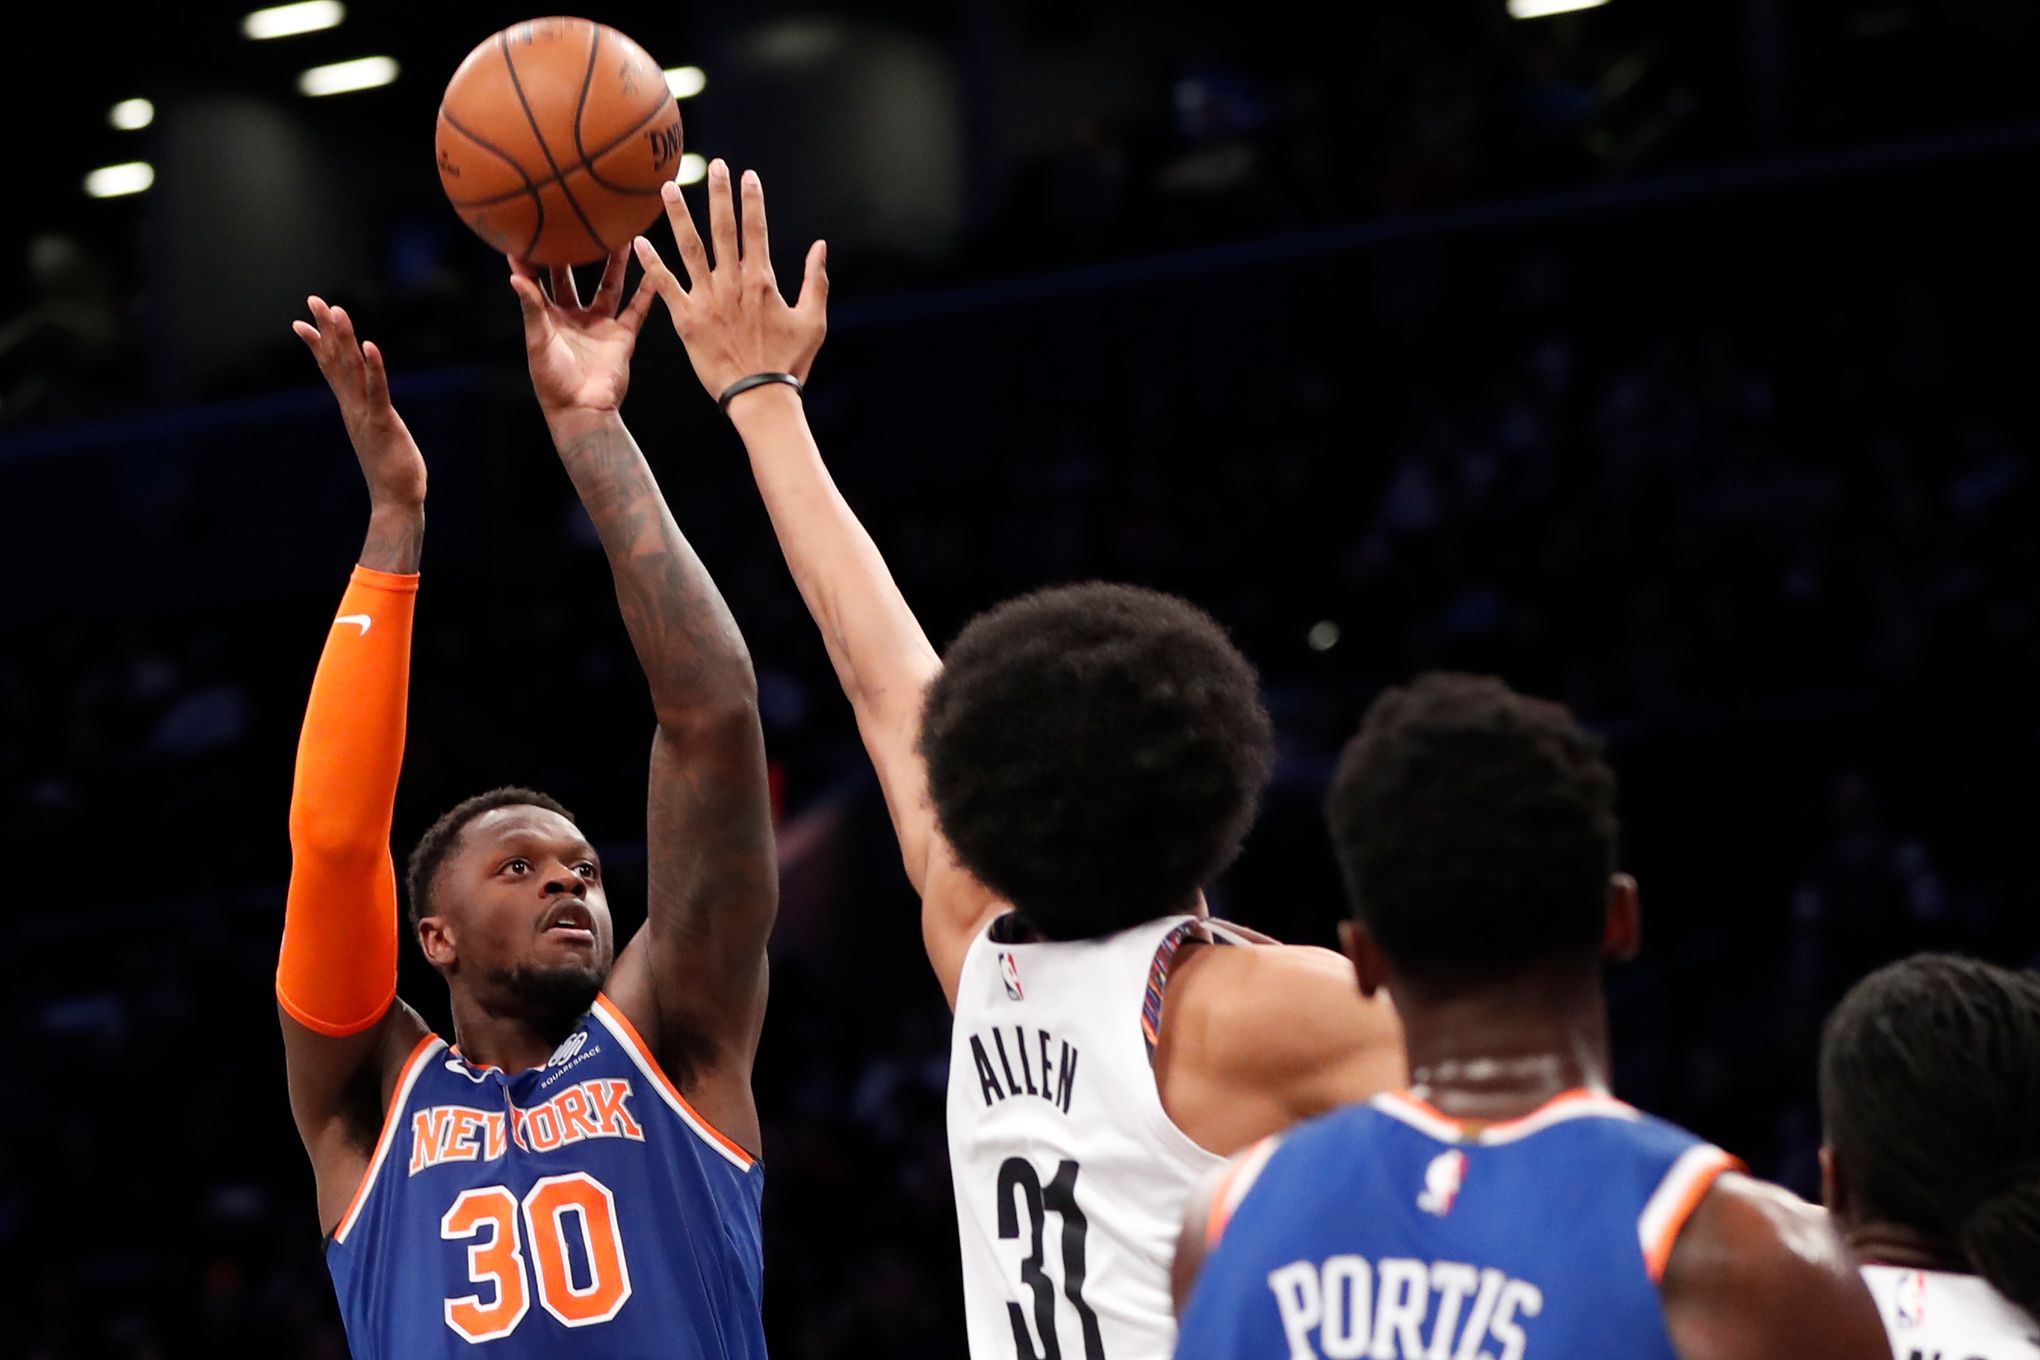 Nets-Knicks: More Than Just an NBA Rivalry